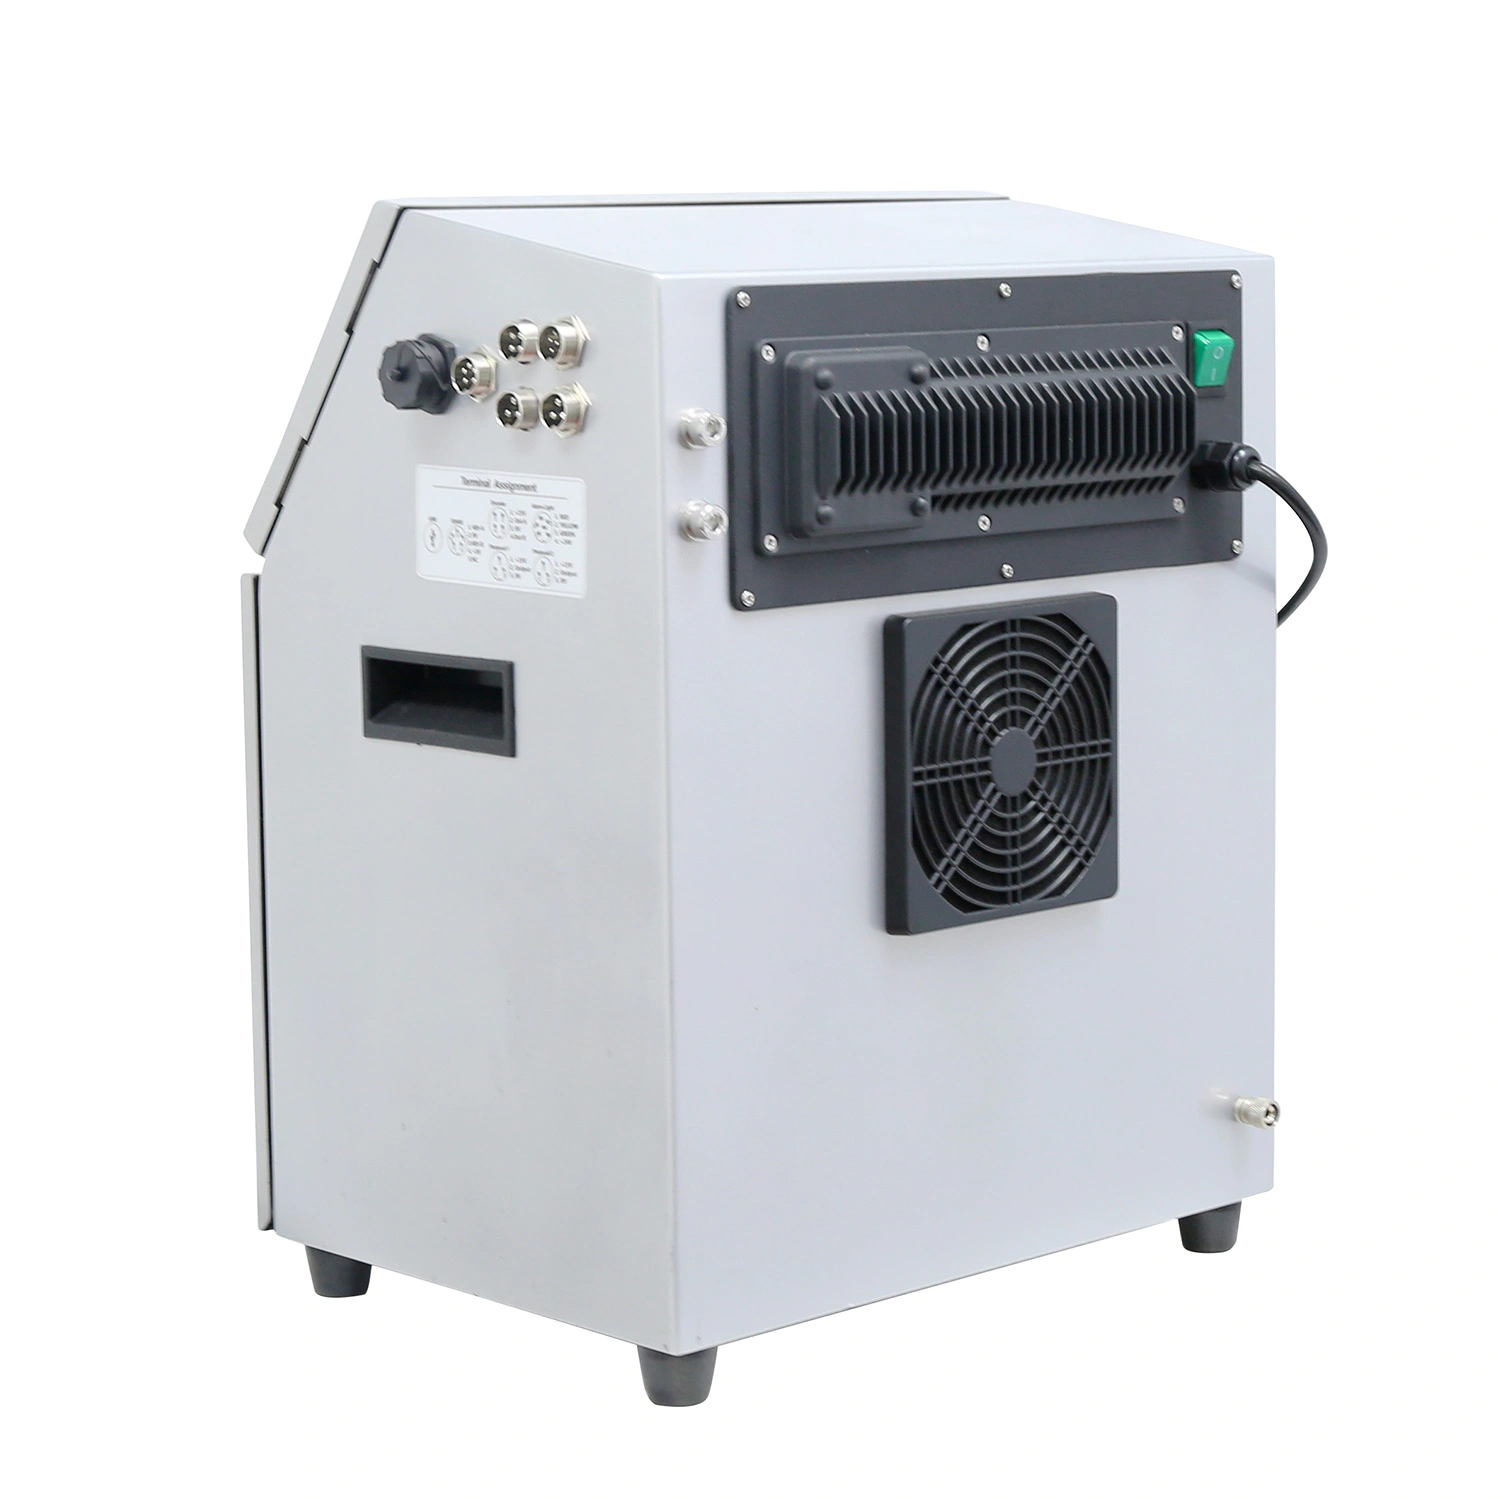 Lead Tech Lt800 Printing Machine Carton Continuous Industrial Inkjet Printer